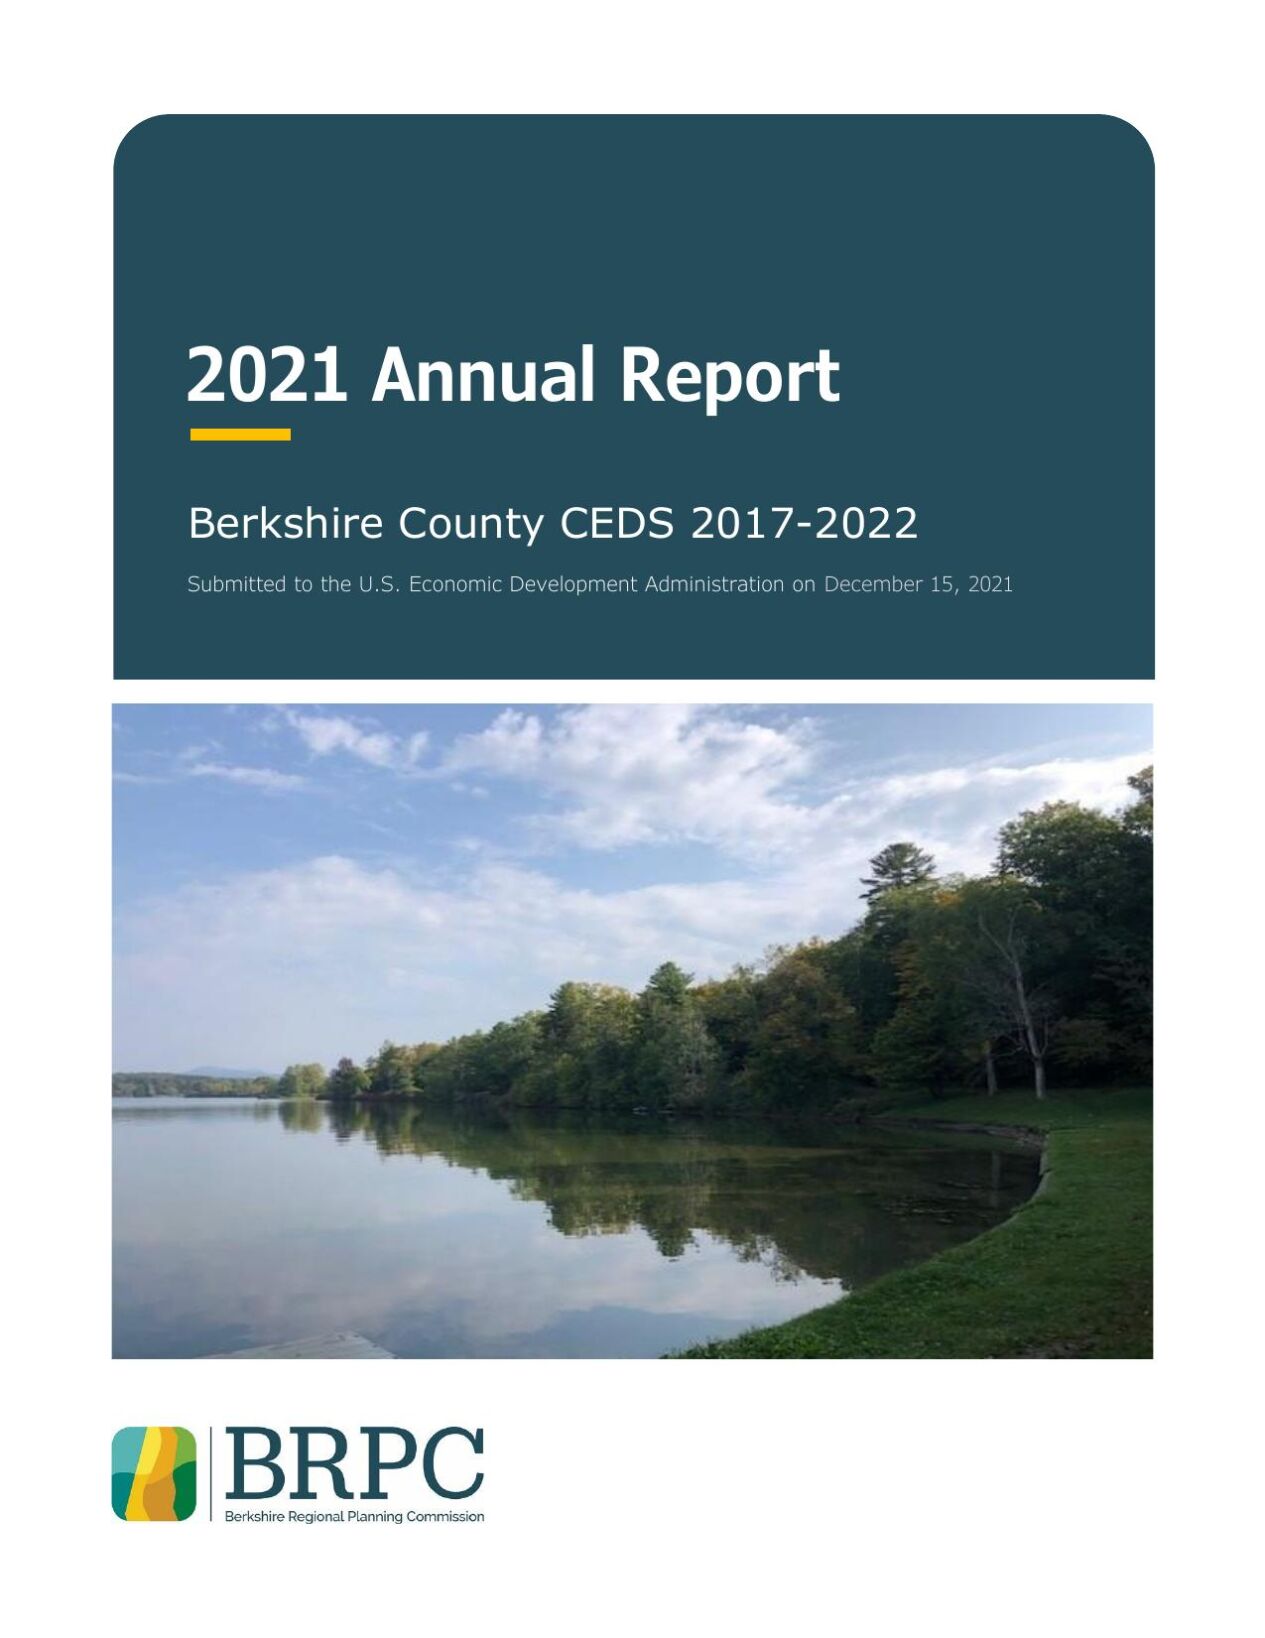 2021 Report to U.S. Economic Development Administration